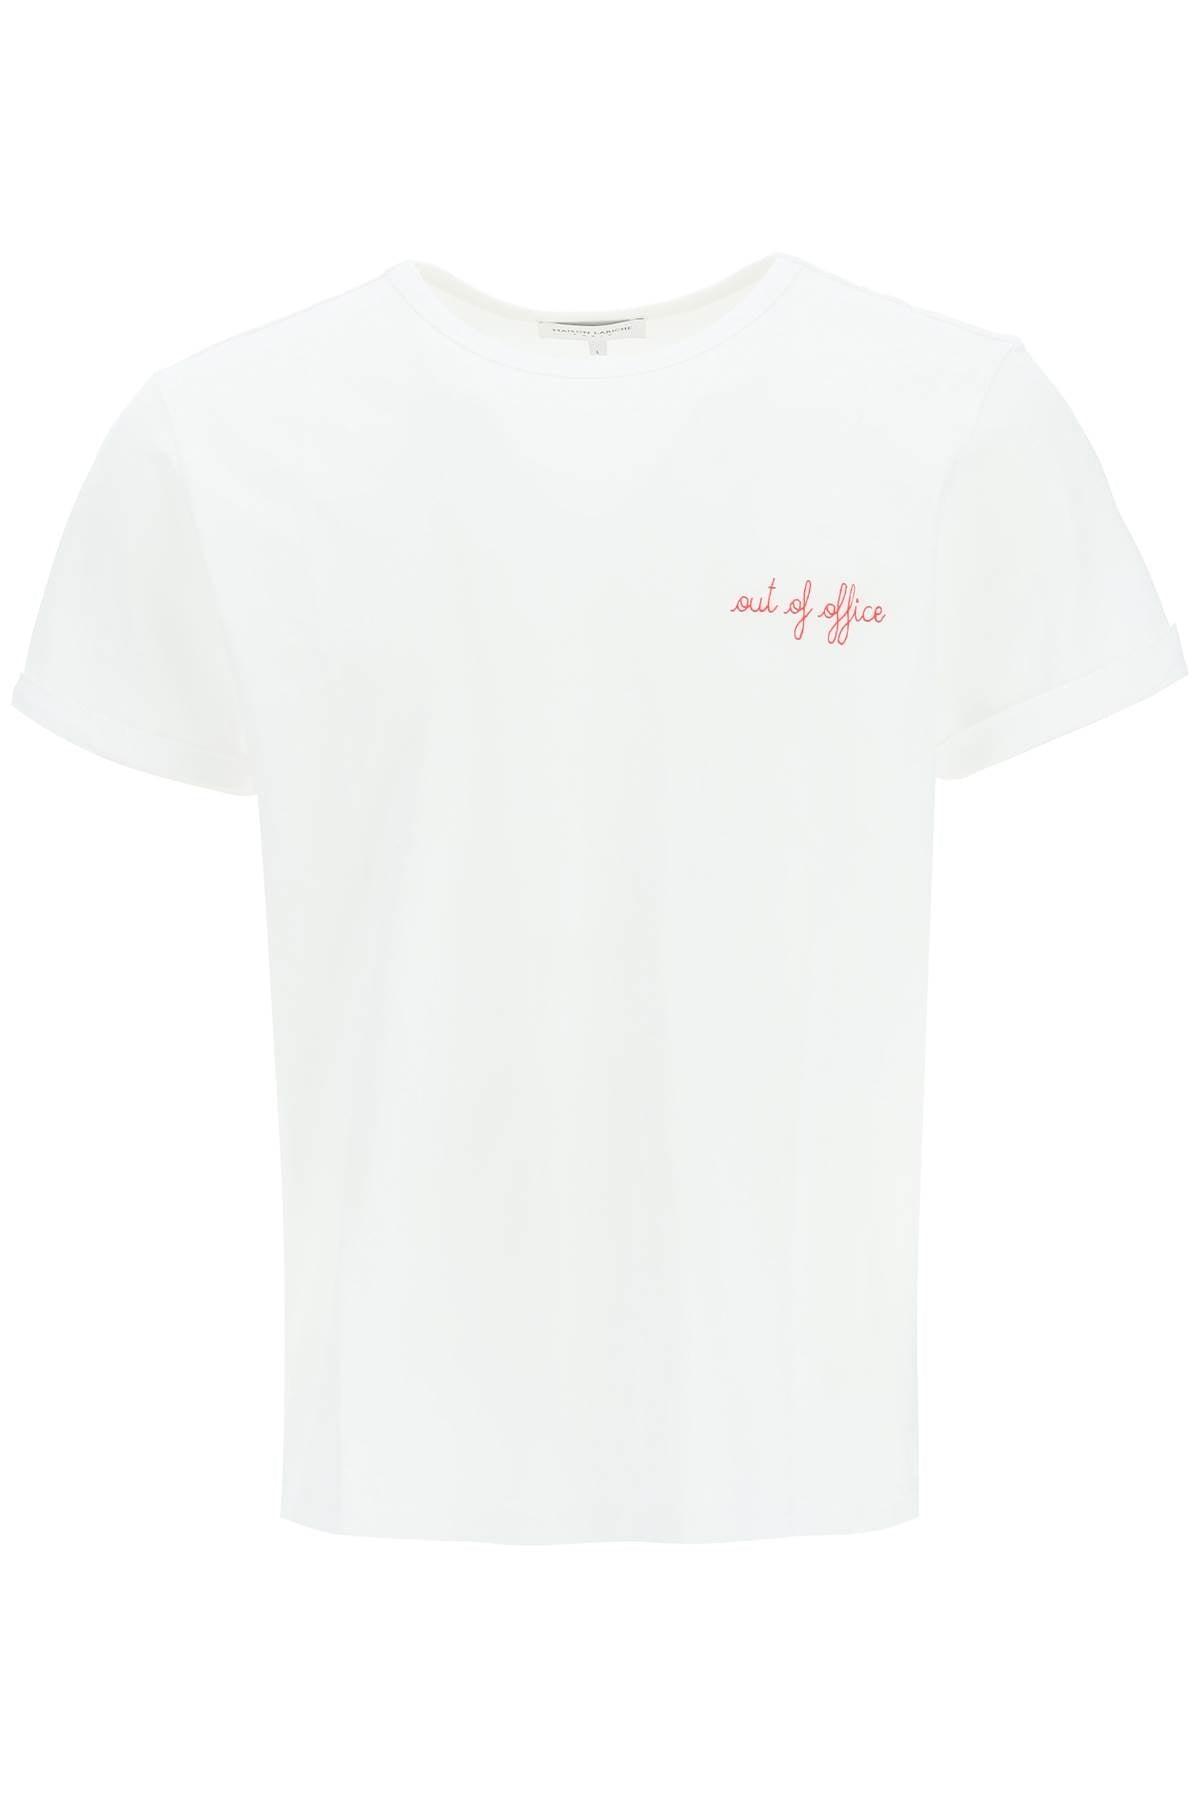 Maison Labiche Cotton "out Of Office" Poitou T-shirt in White for Men | Lyst